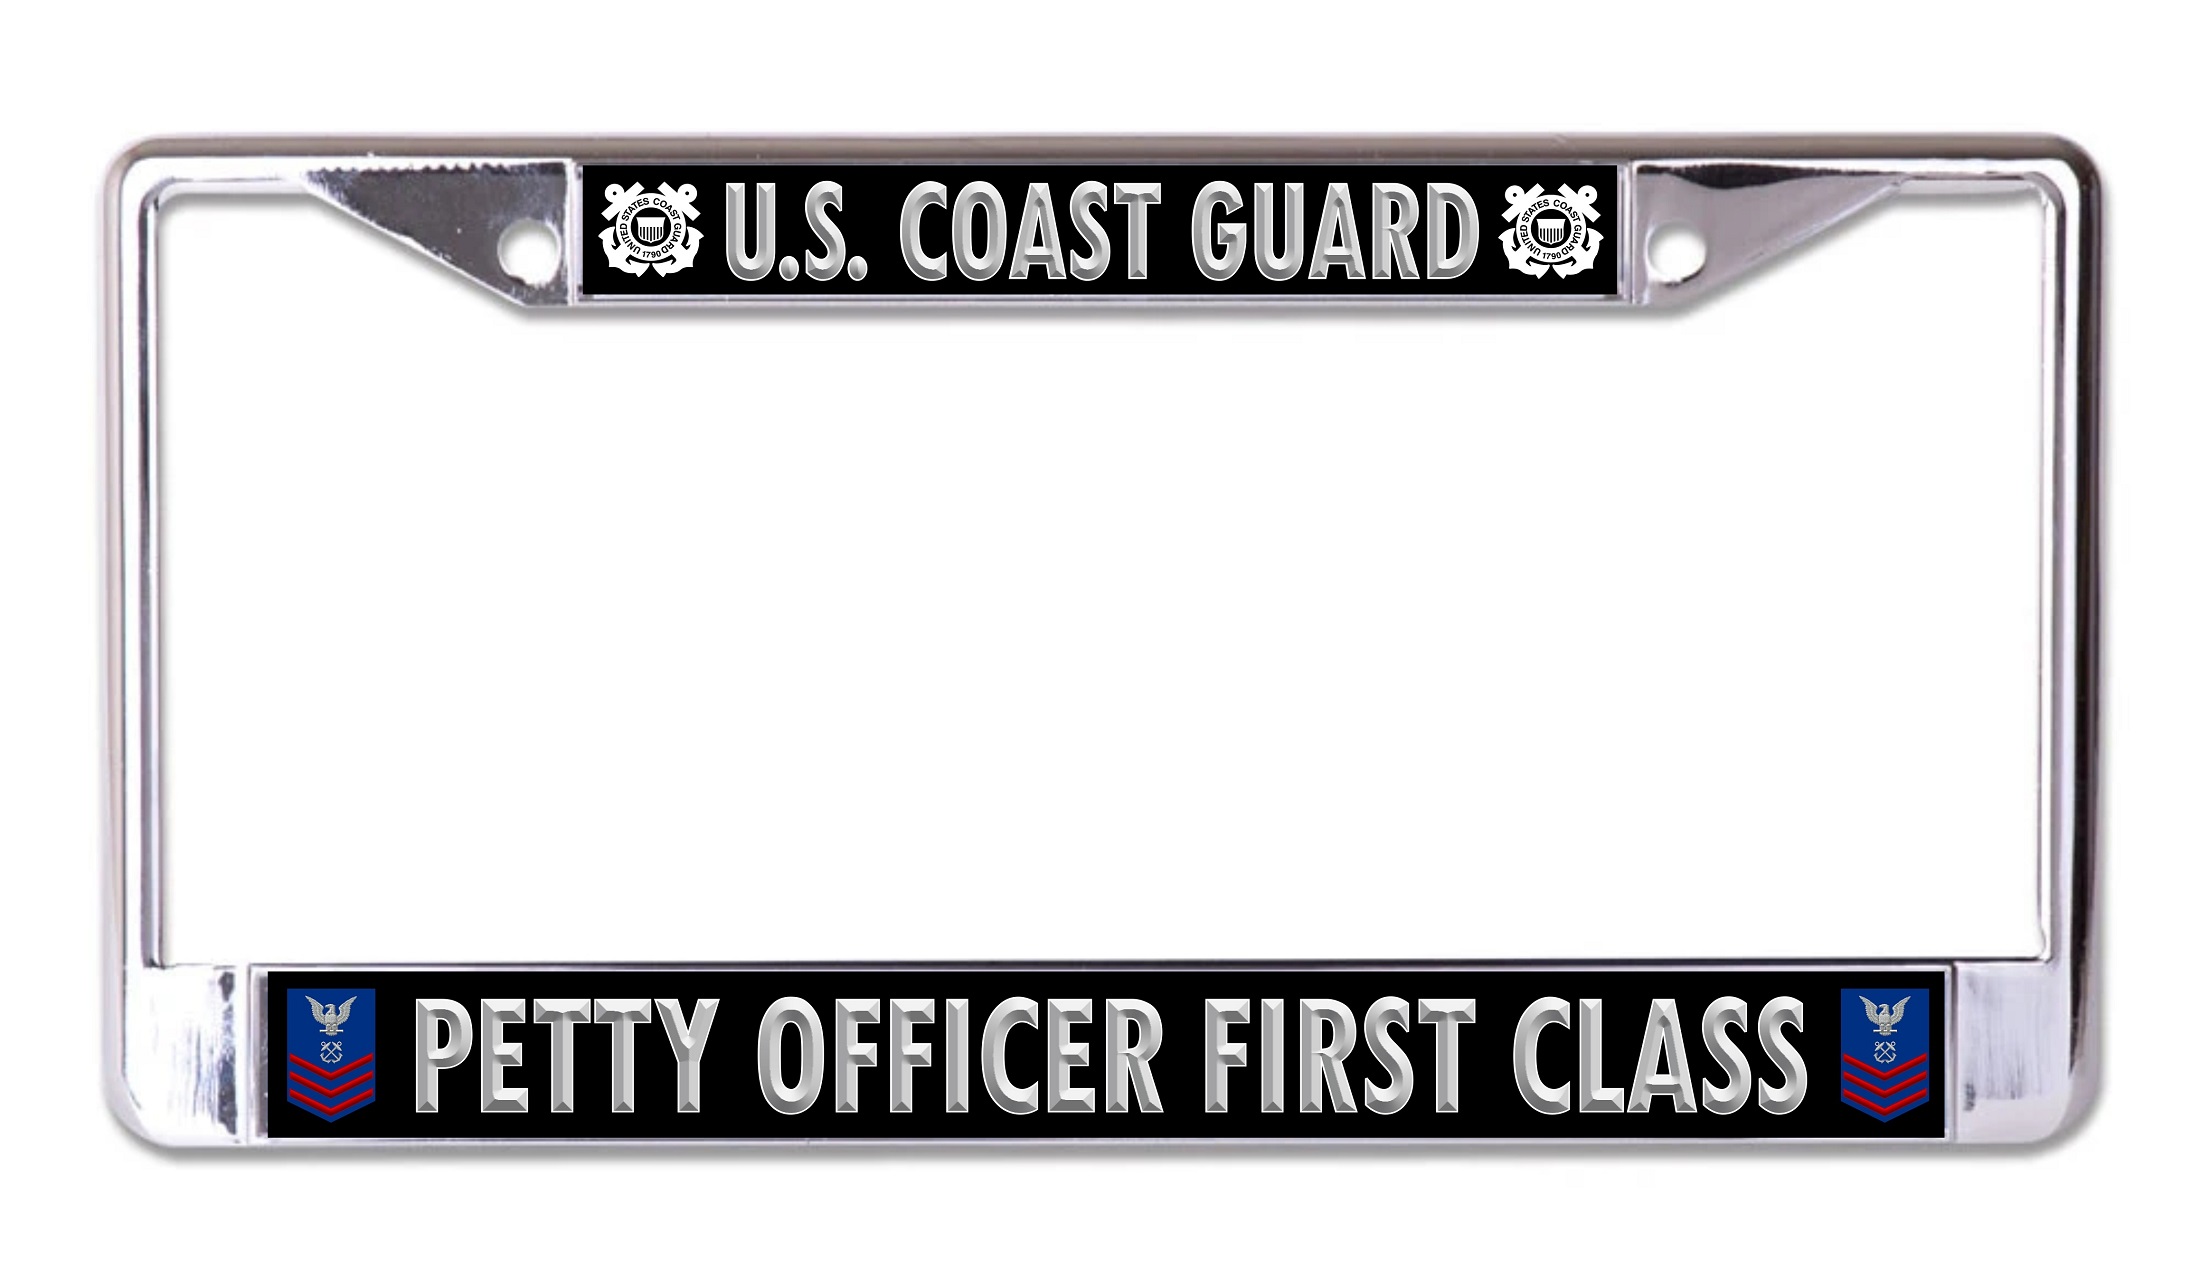 U.S. Coast Guard Petty Officer First Class Chrome LICENSE PLATE Frame